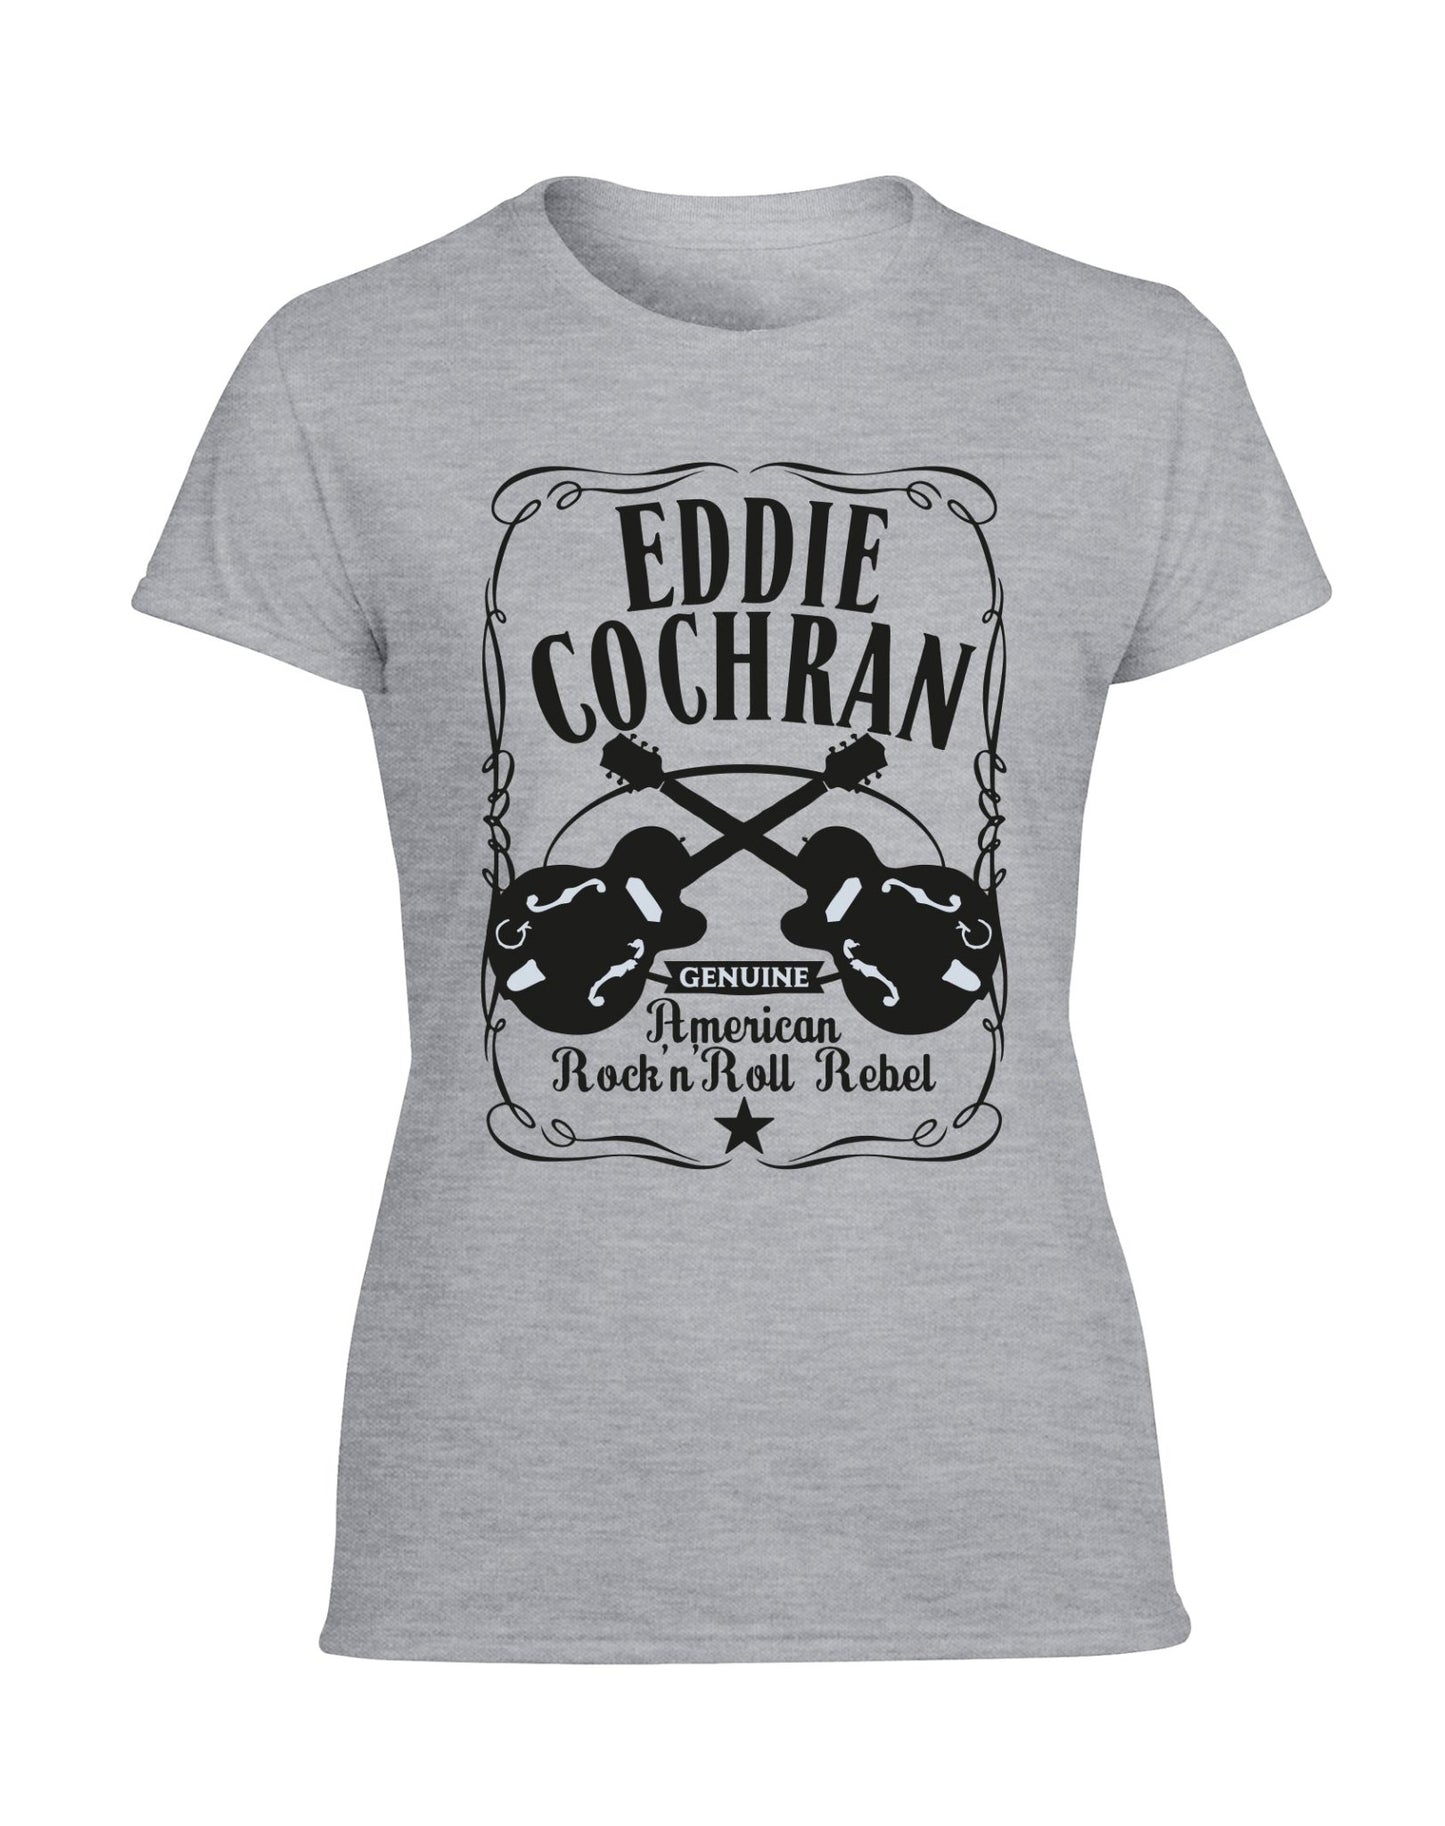 Eddie Cochran - cross Gretsch design - ladies fit t-shirt- various colours - Dirty Stop Outs